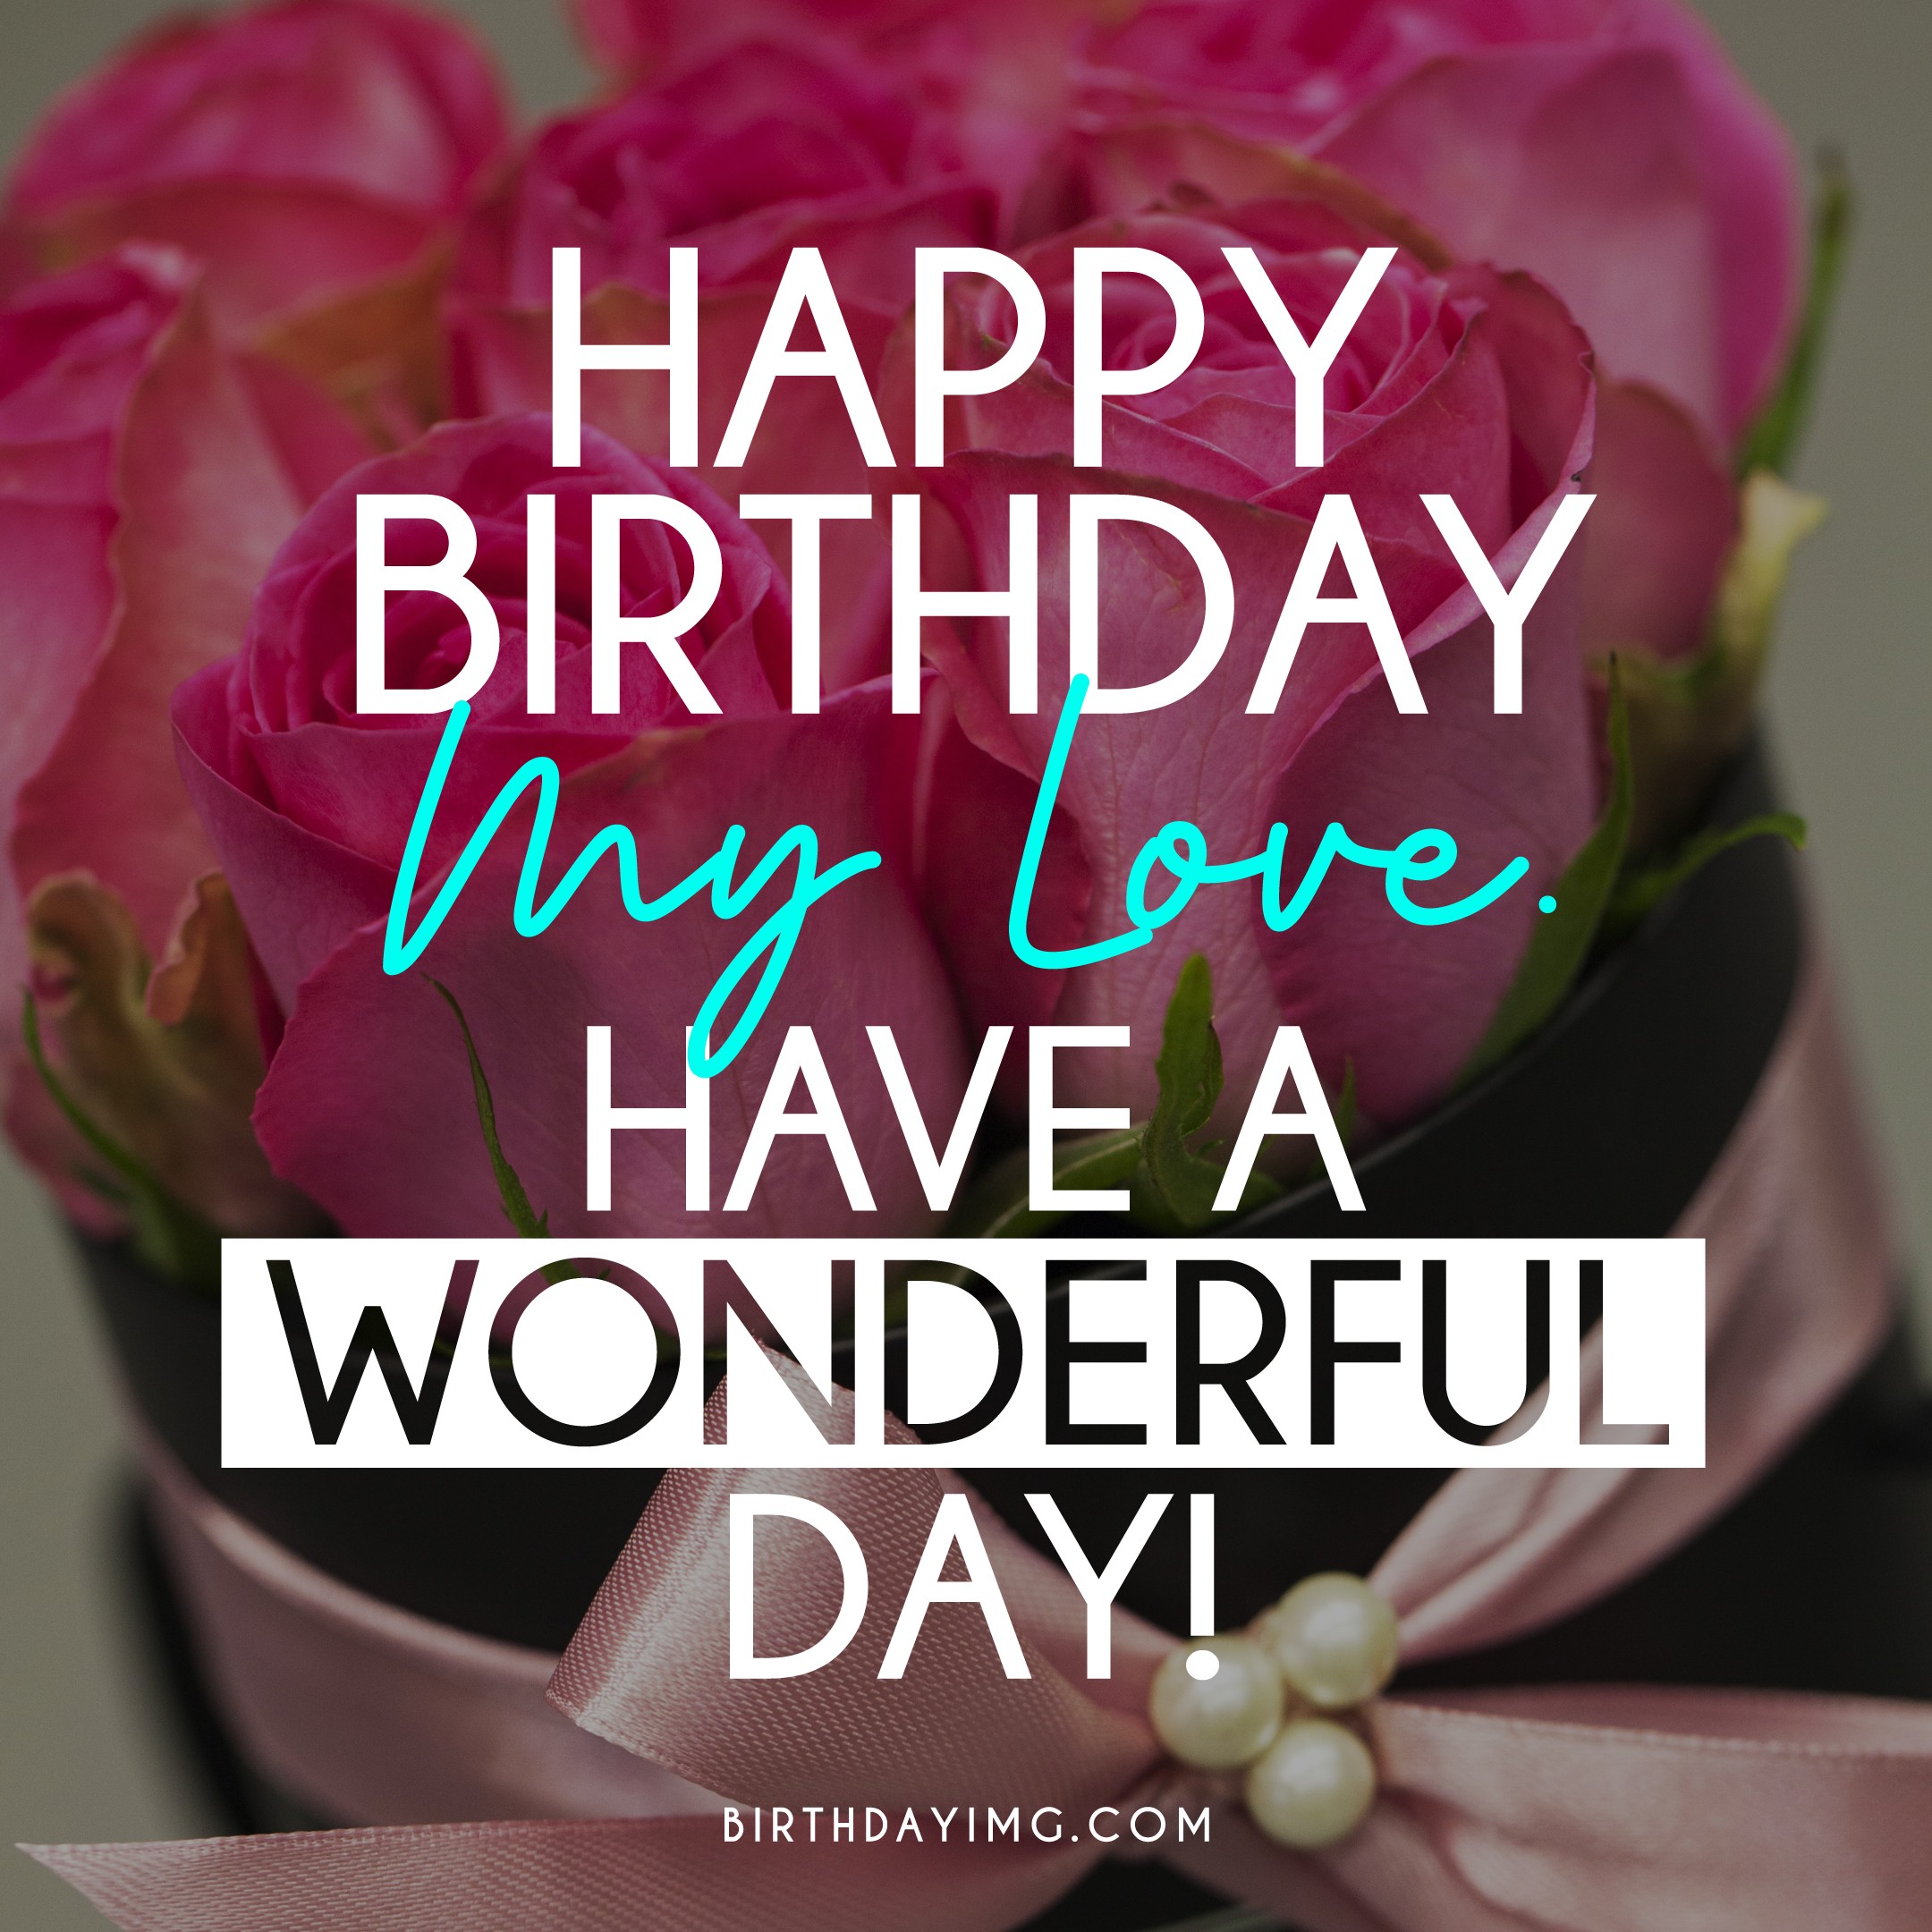 Free Happy Birthday Love Image - birthdayimg.com